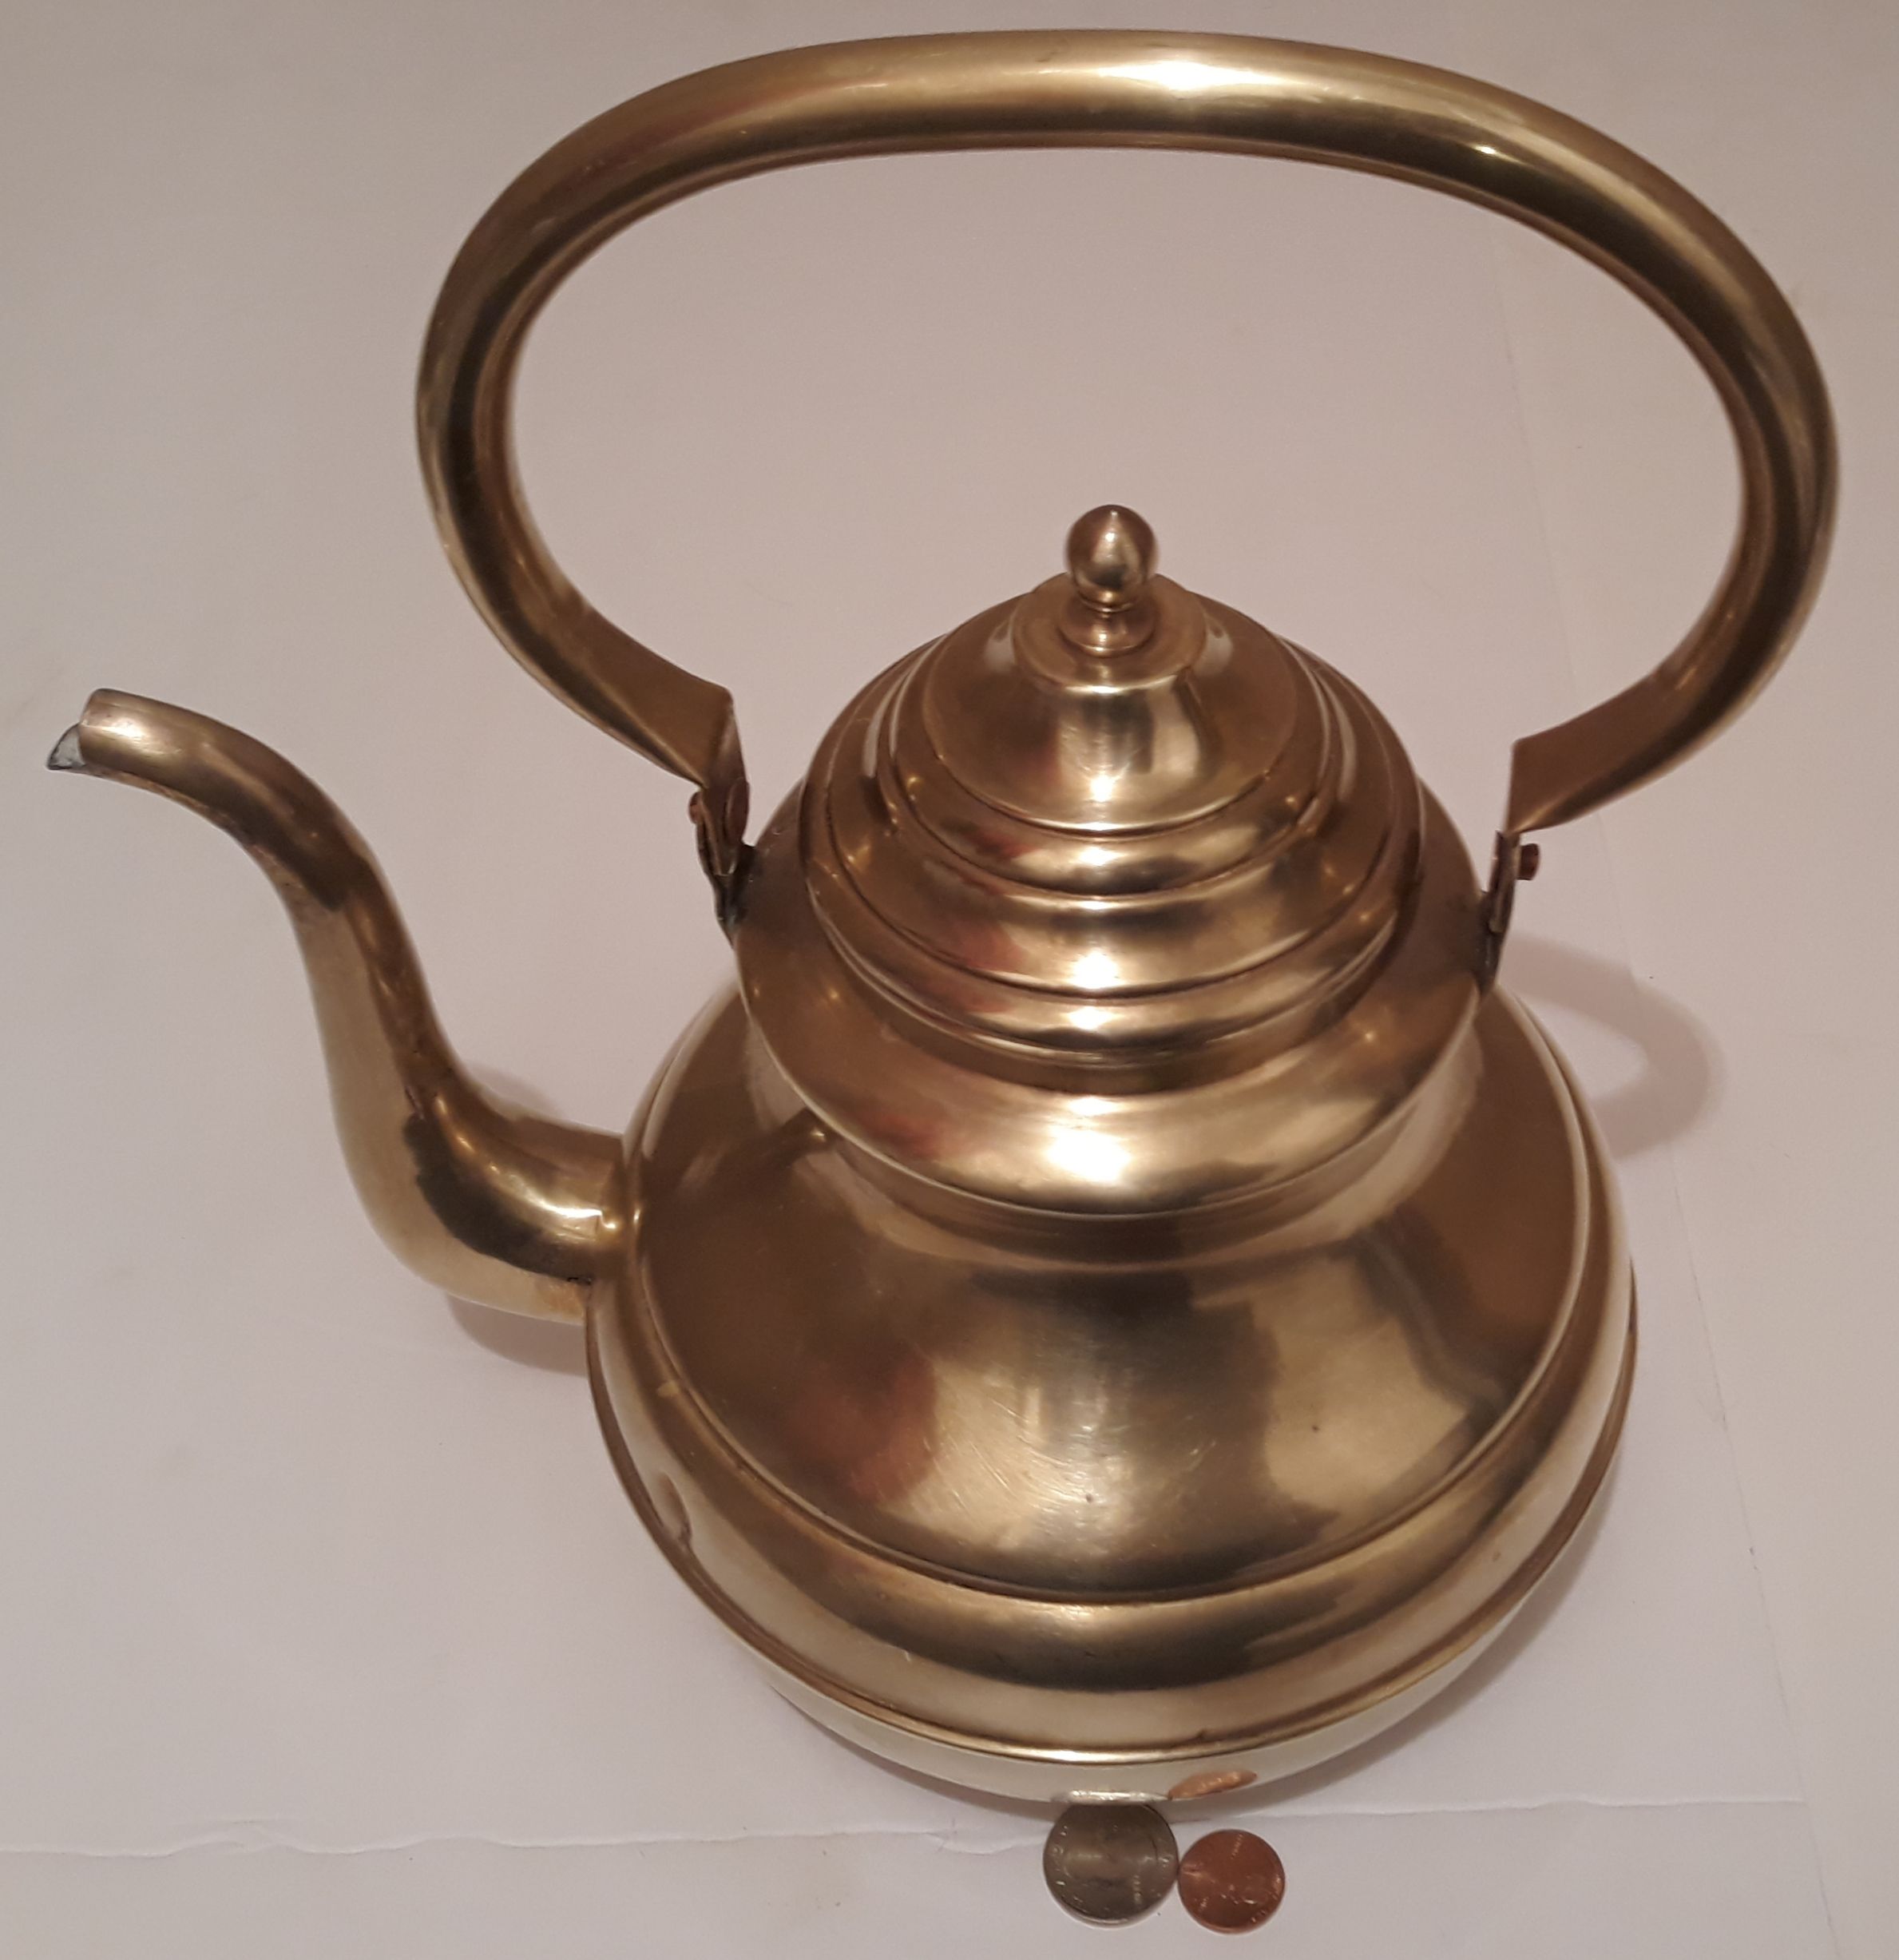 Vintage Metal Big Brass Teapot, Kettle, Kitchen Decor, Cooking, Hanging Decor, Shelf Display, 12" x 10", Heavy Duty, Made in Belgium